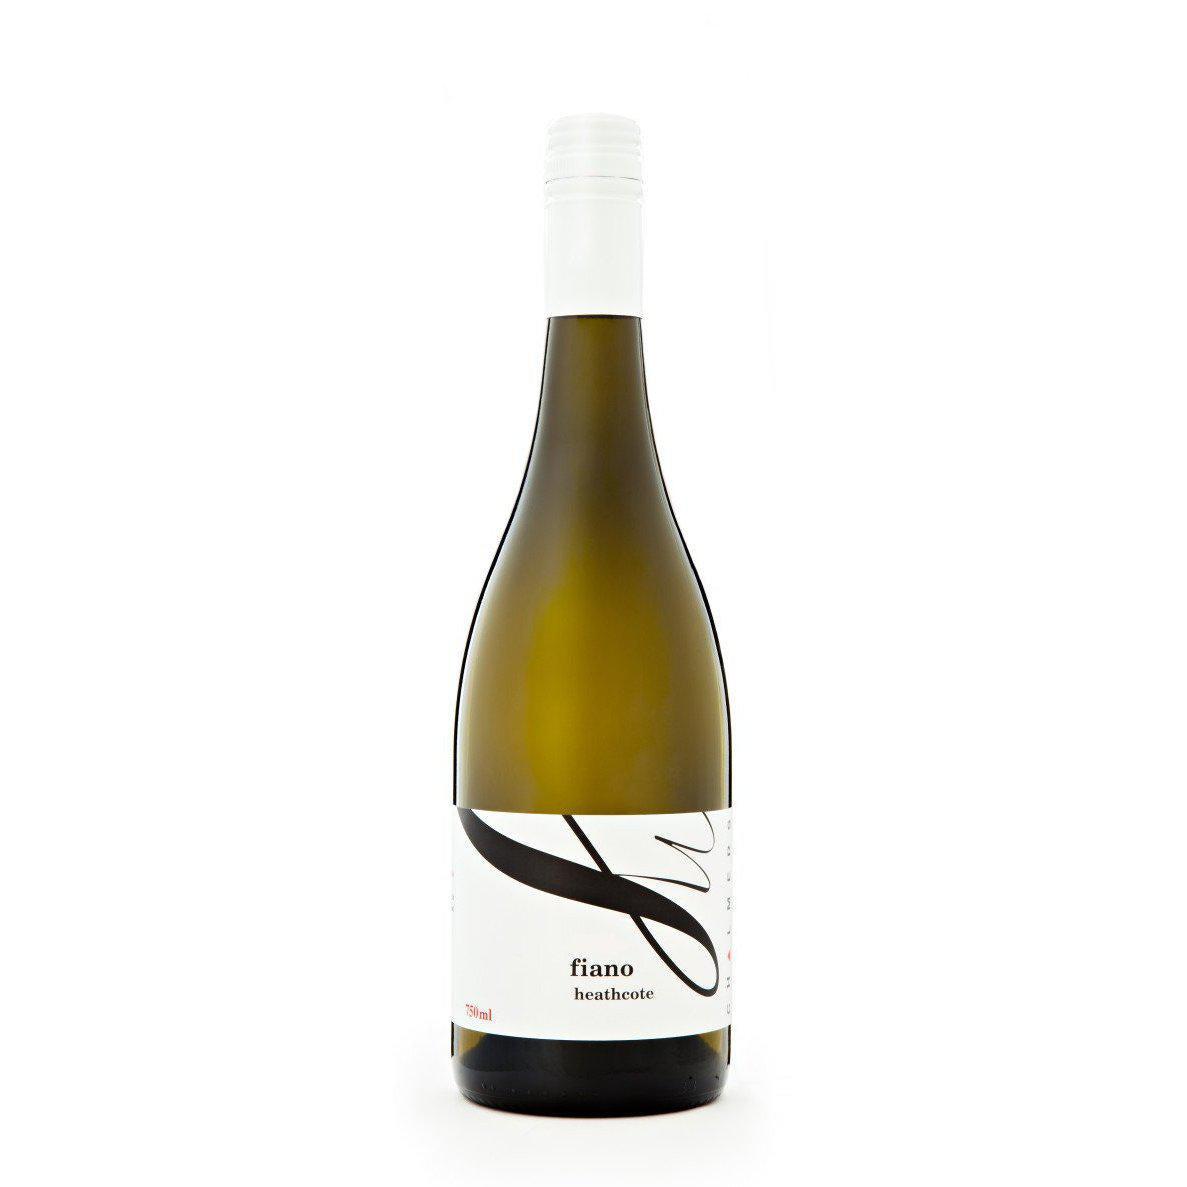 Chalmers Fiano 2021-White Wine-World Wine